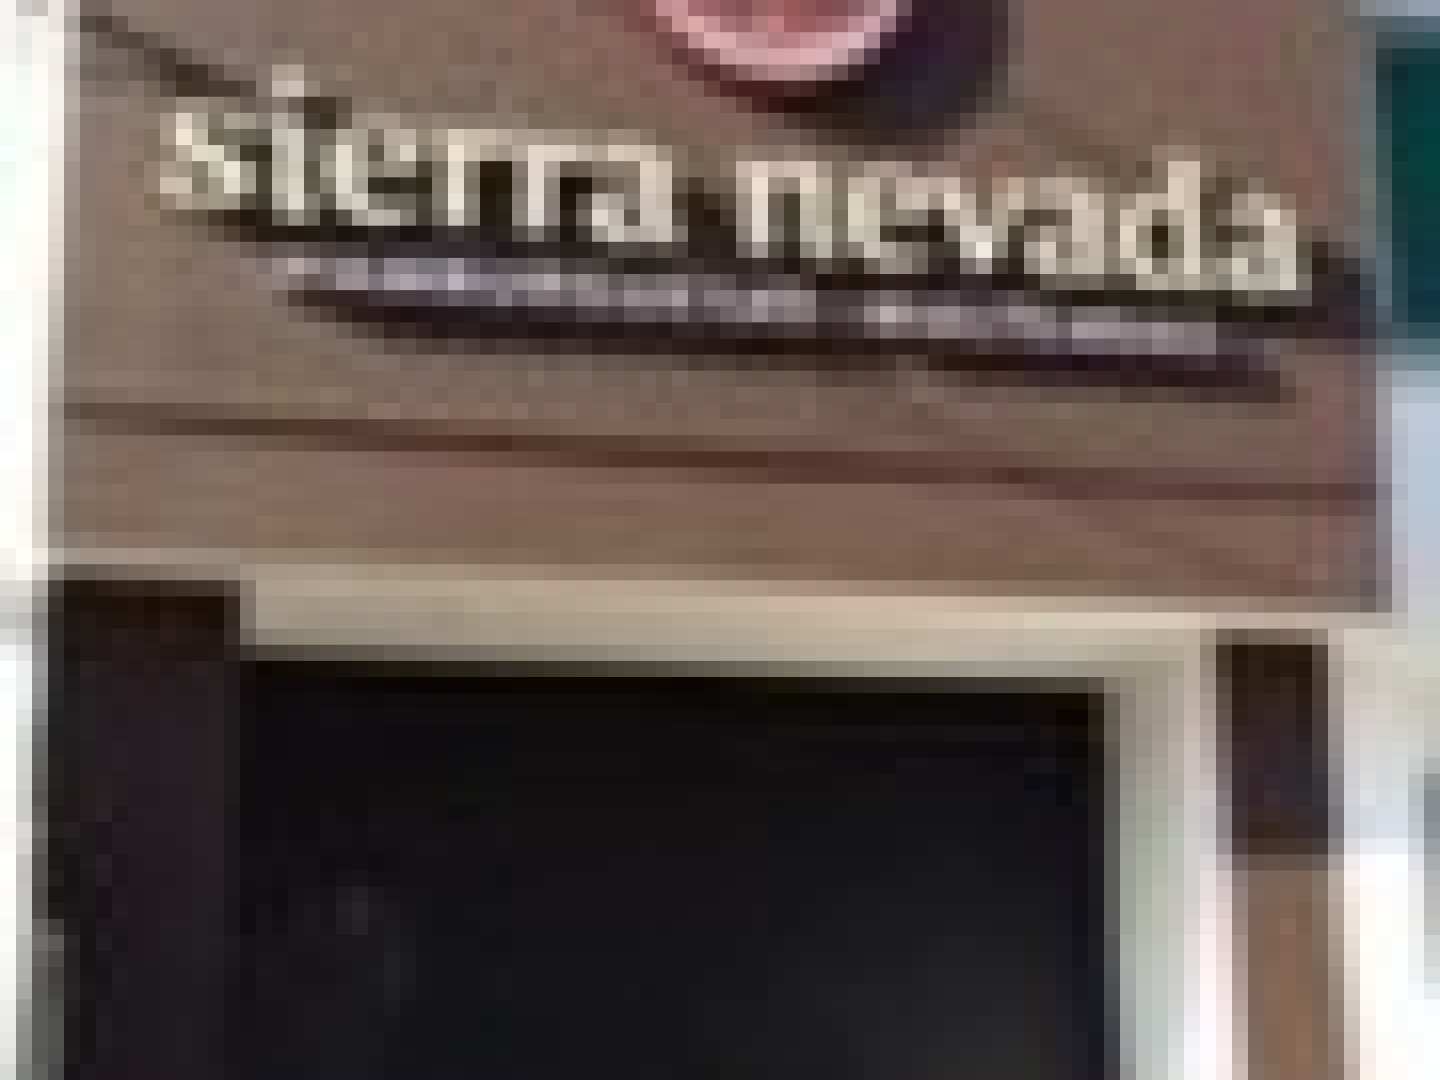 Sierra Nevada (calle 122)